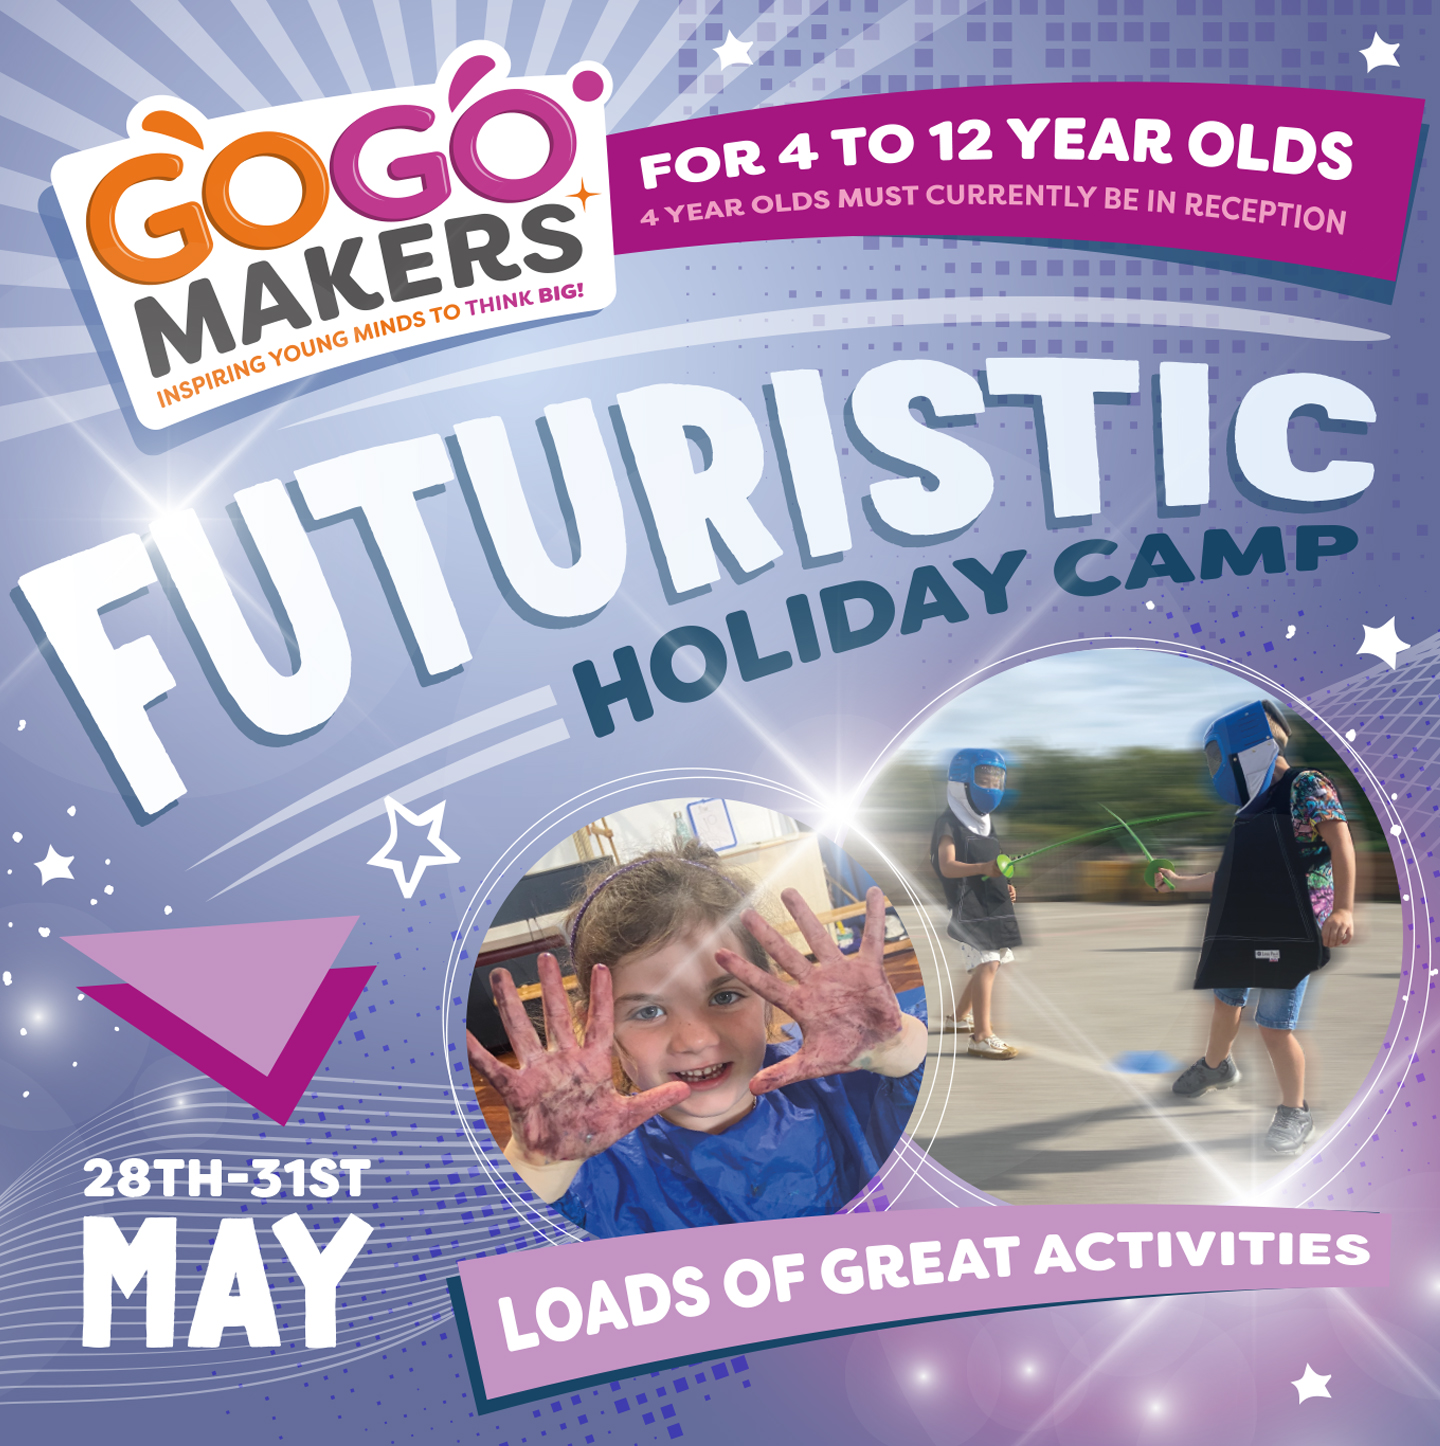 GO GO Makers May Half Term Holiday Camp at Heathcote Primary School, Warwick